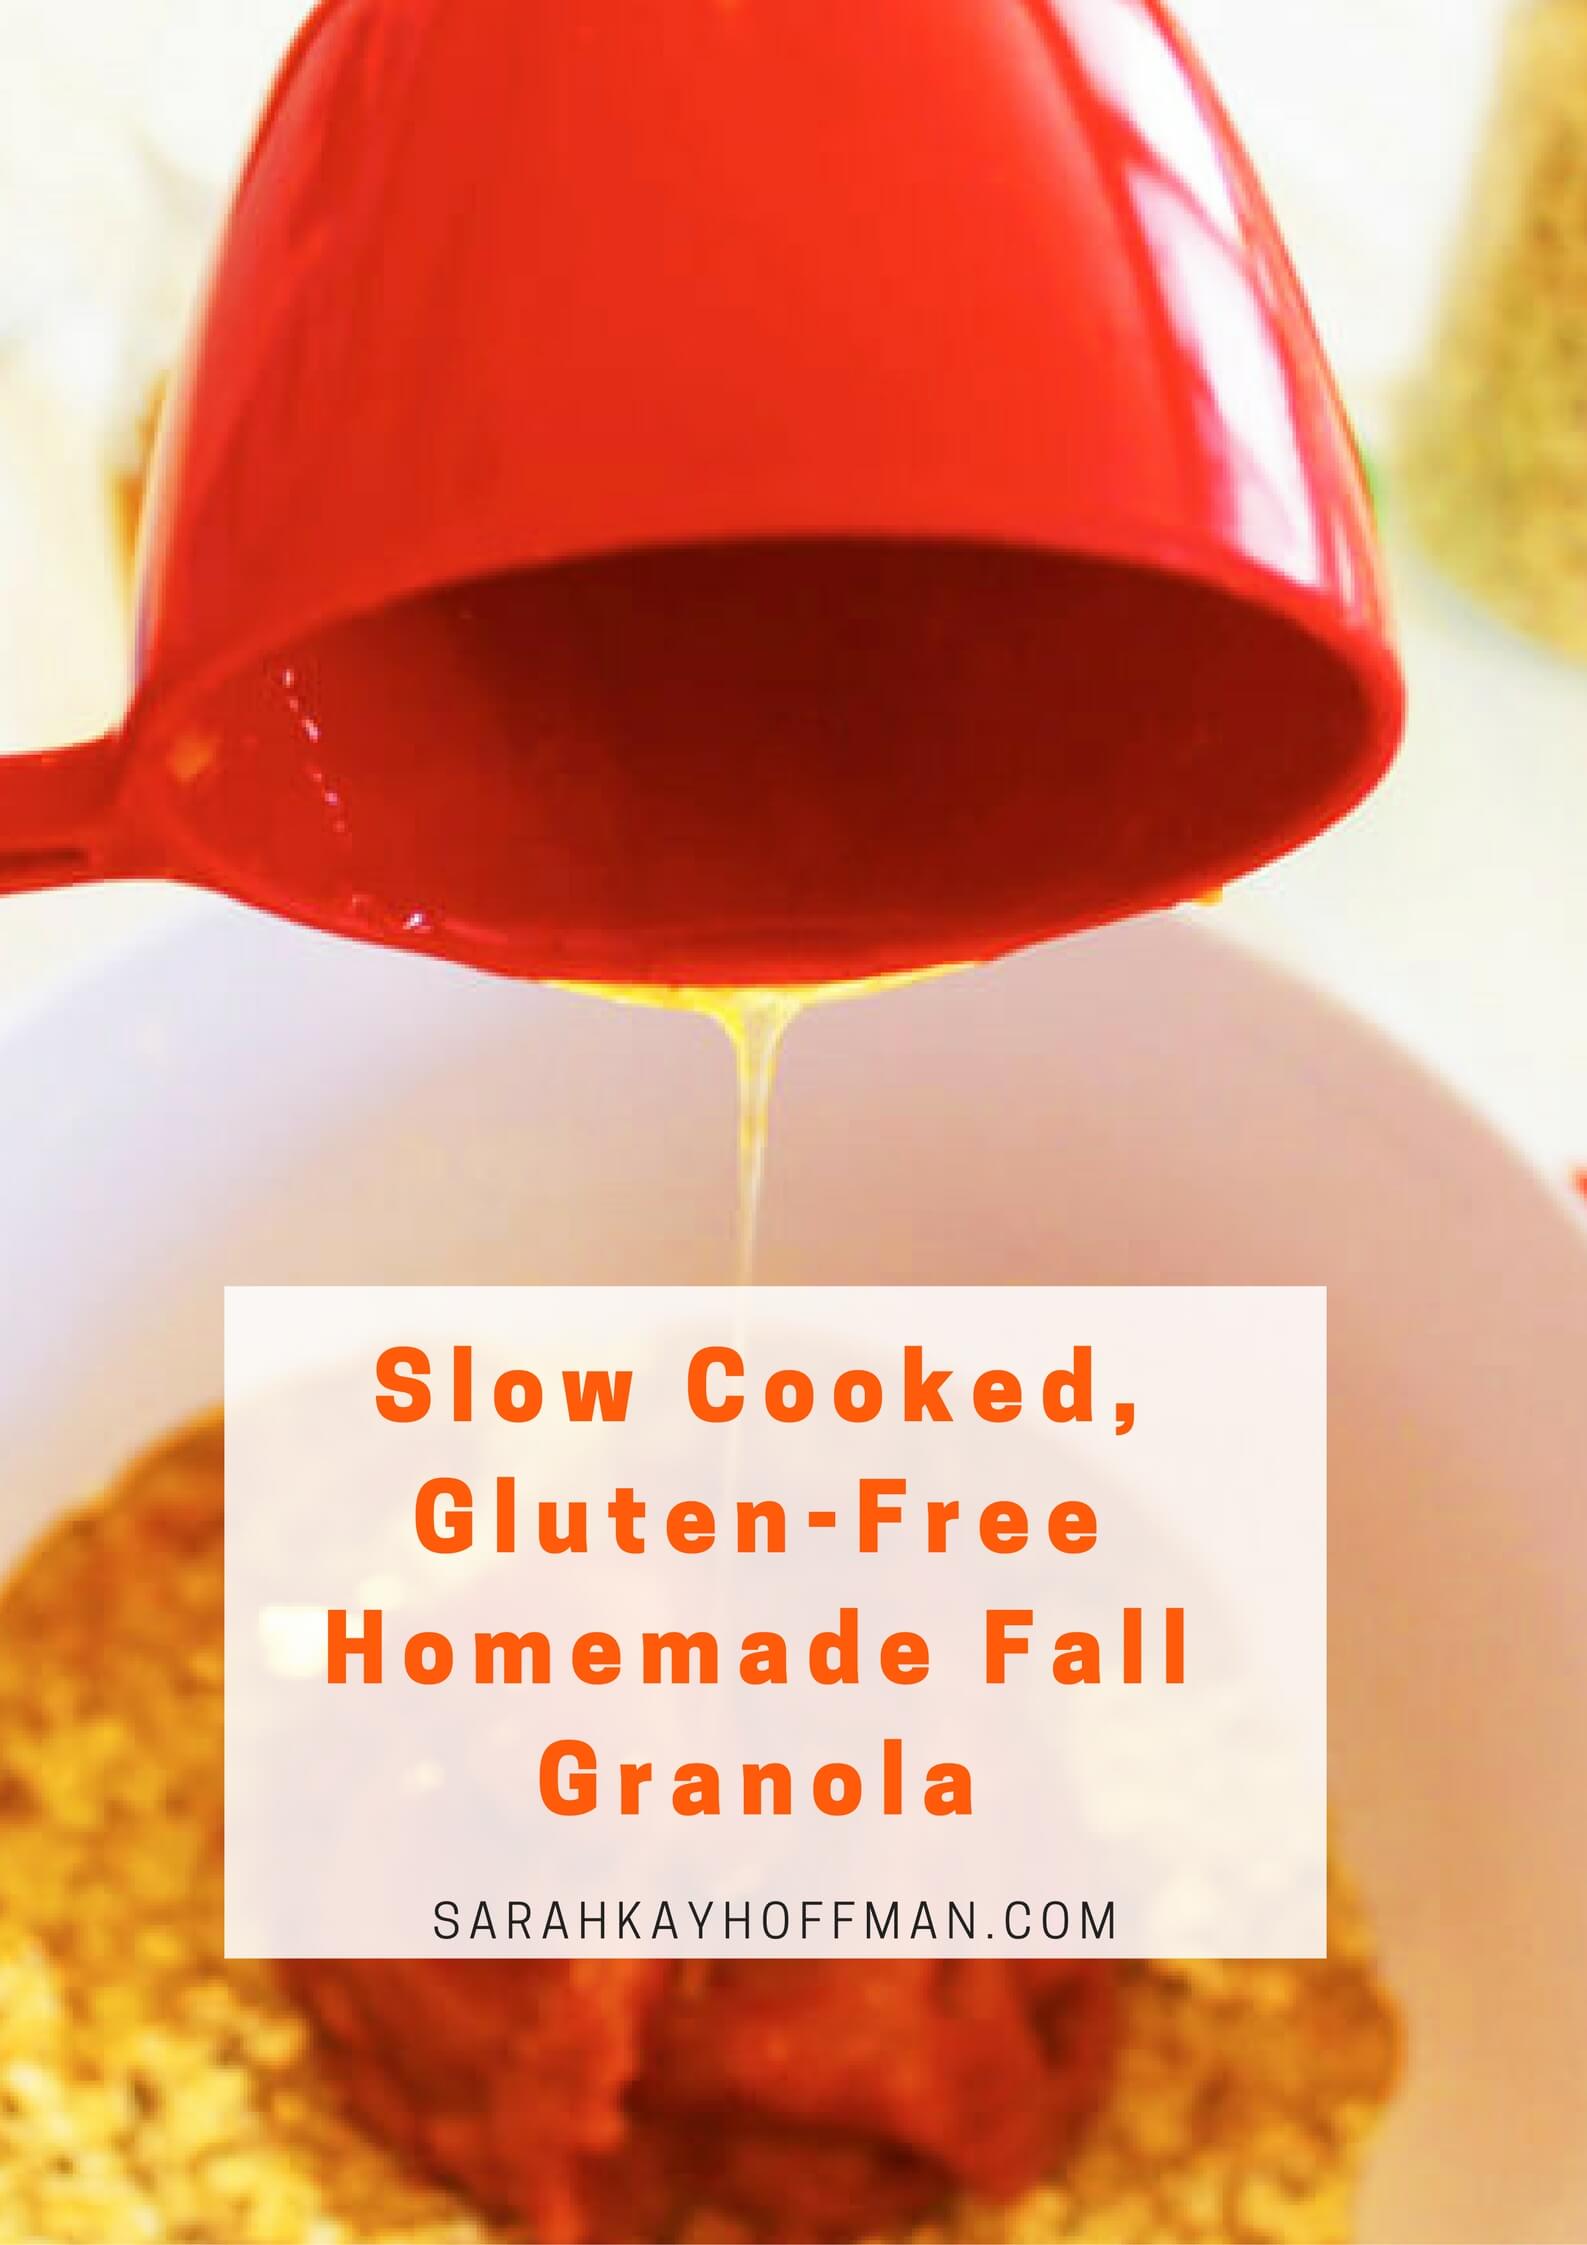 Slow Cooked, Gluten-Free Homemade Fall Granola via sarahkayhoffman.com #glutenfree #glutenfreerecipes #granola #fall